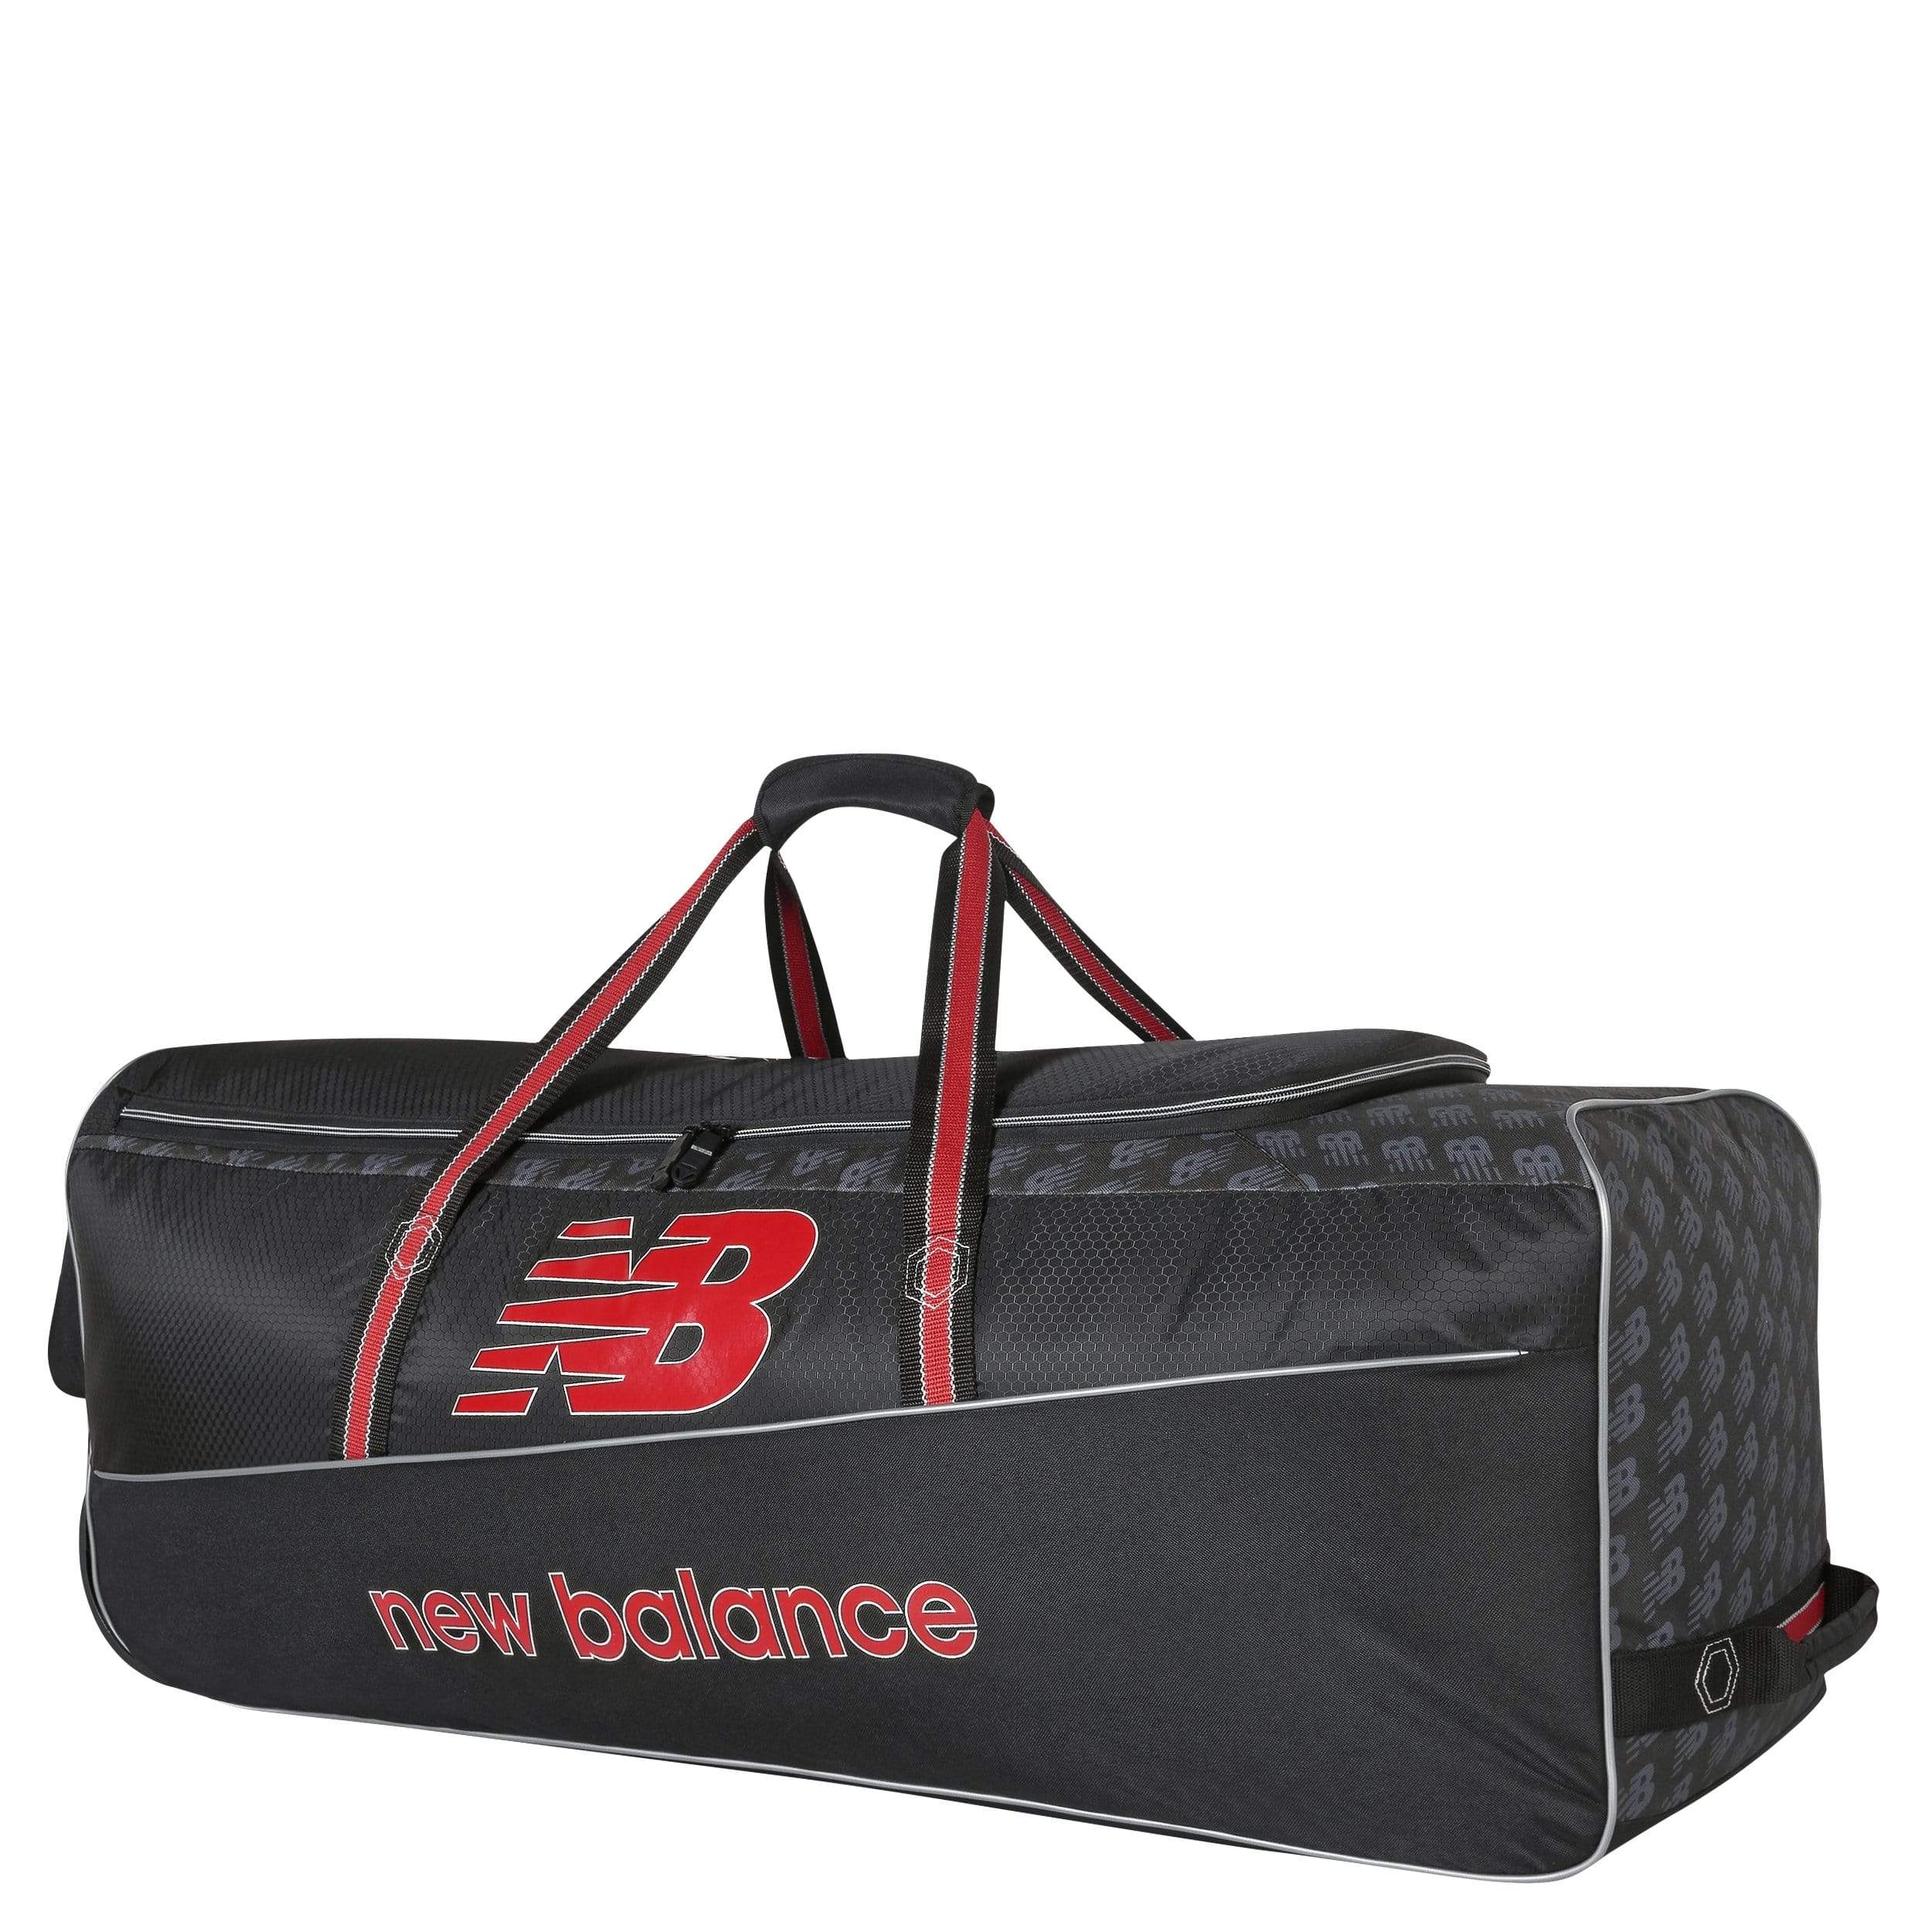 New Balance Cricket Bags New Balance TC660 Wheelie Cricket Kit Bag 2021